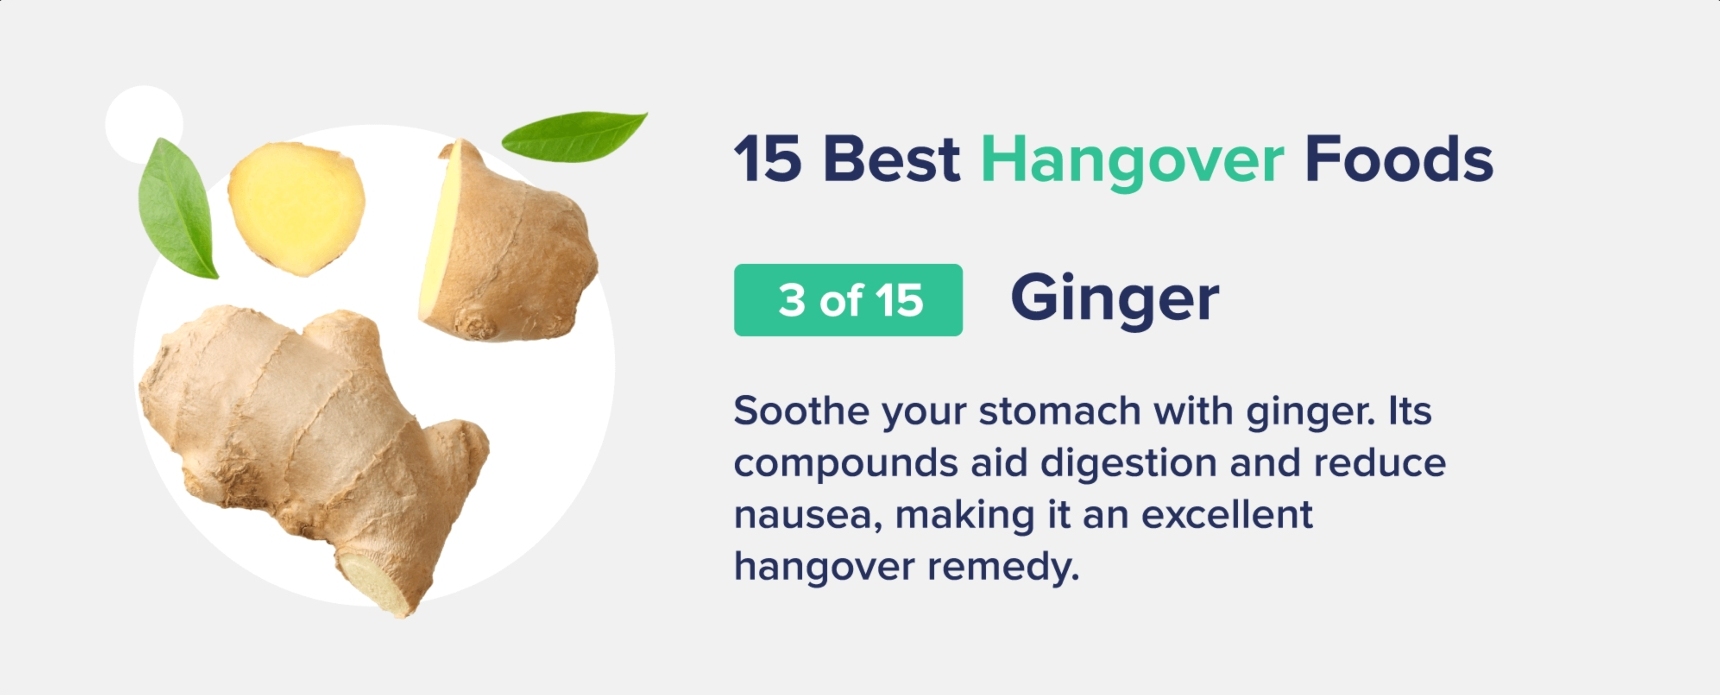 ginger best hangover foods